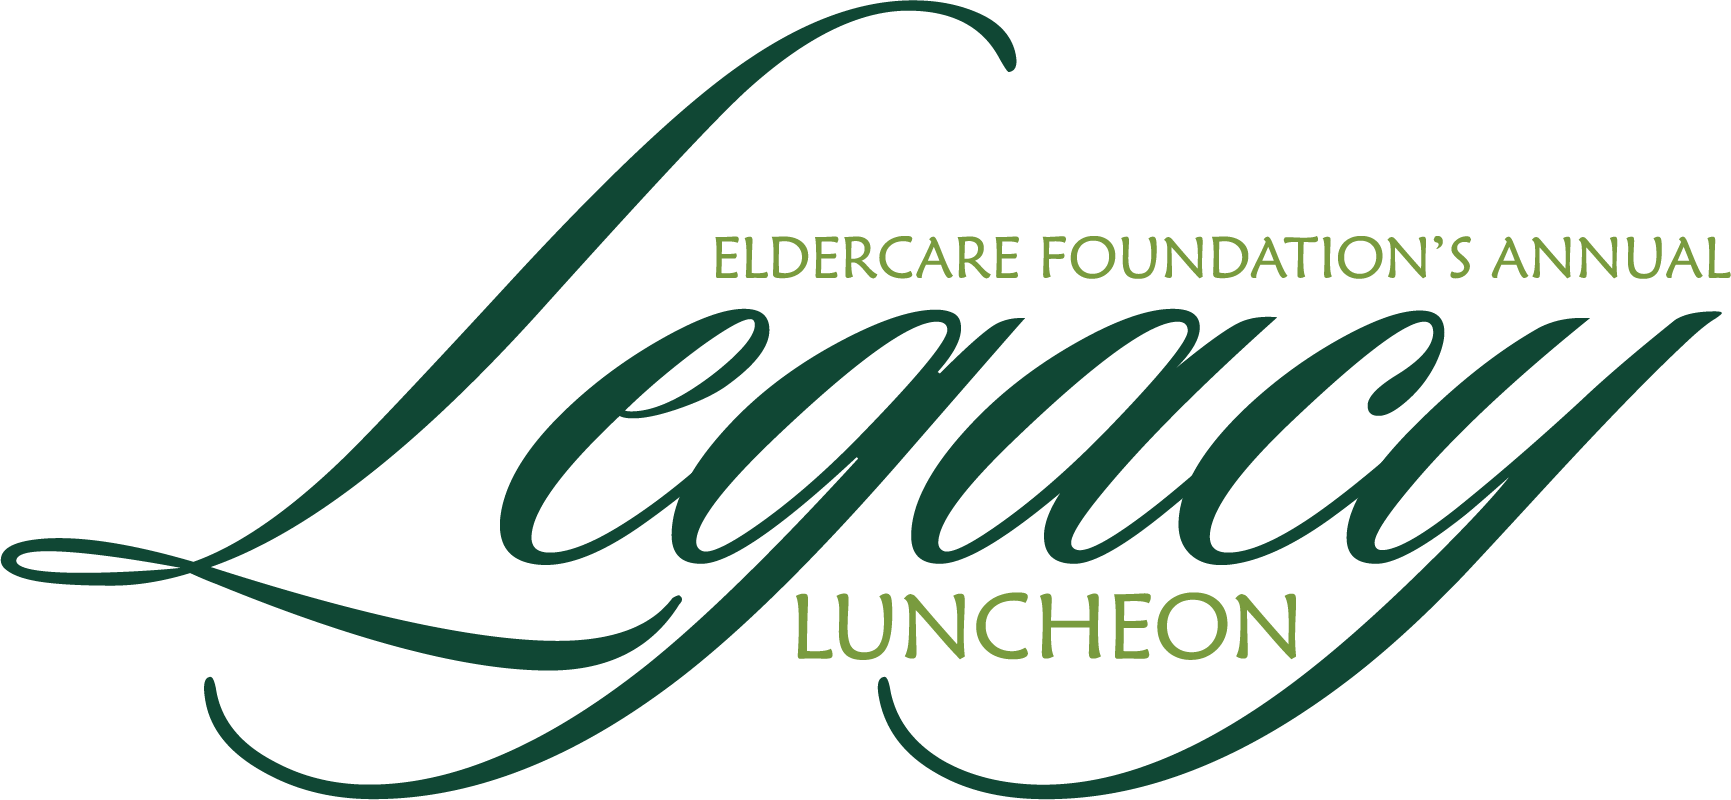 Luncheon Logo - Eagle News Online